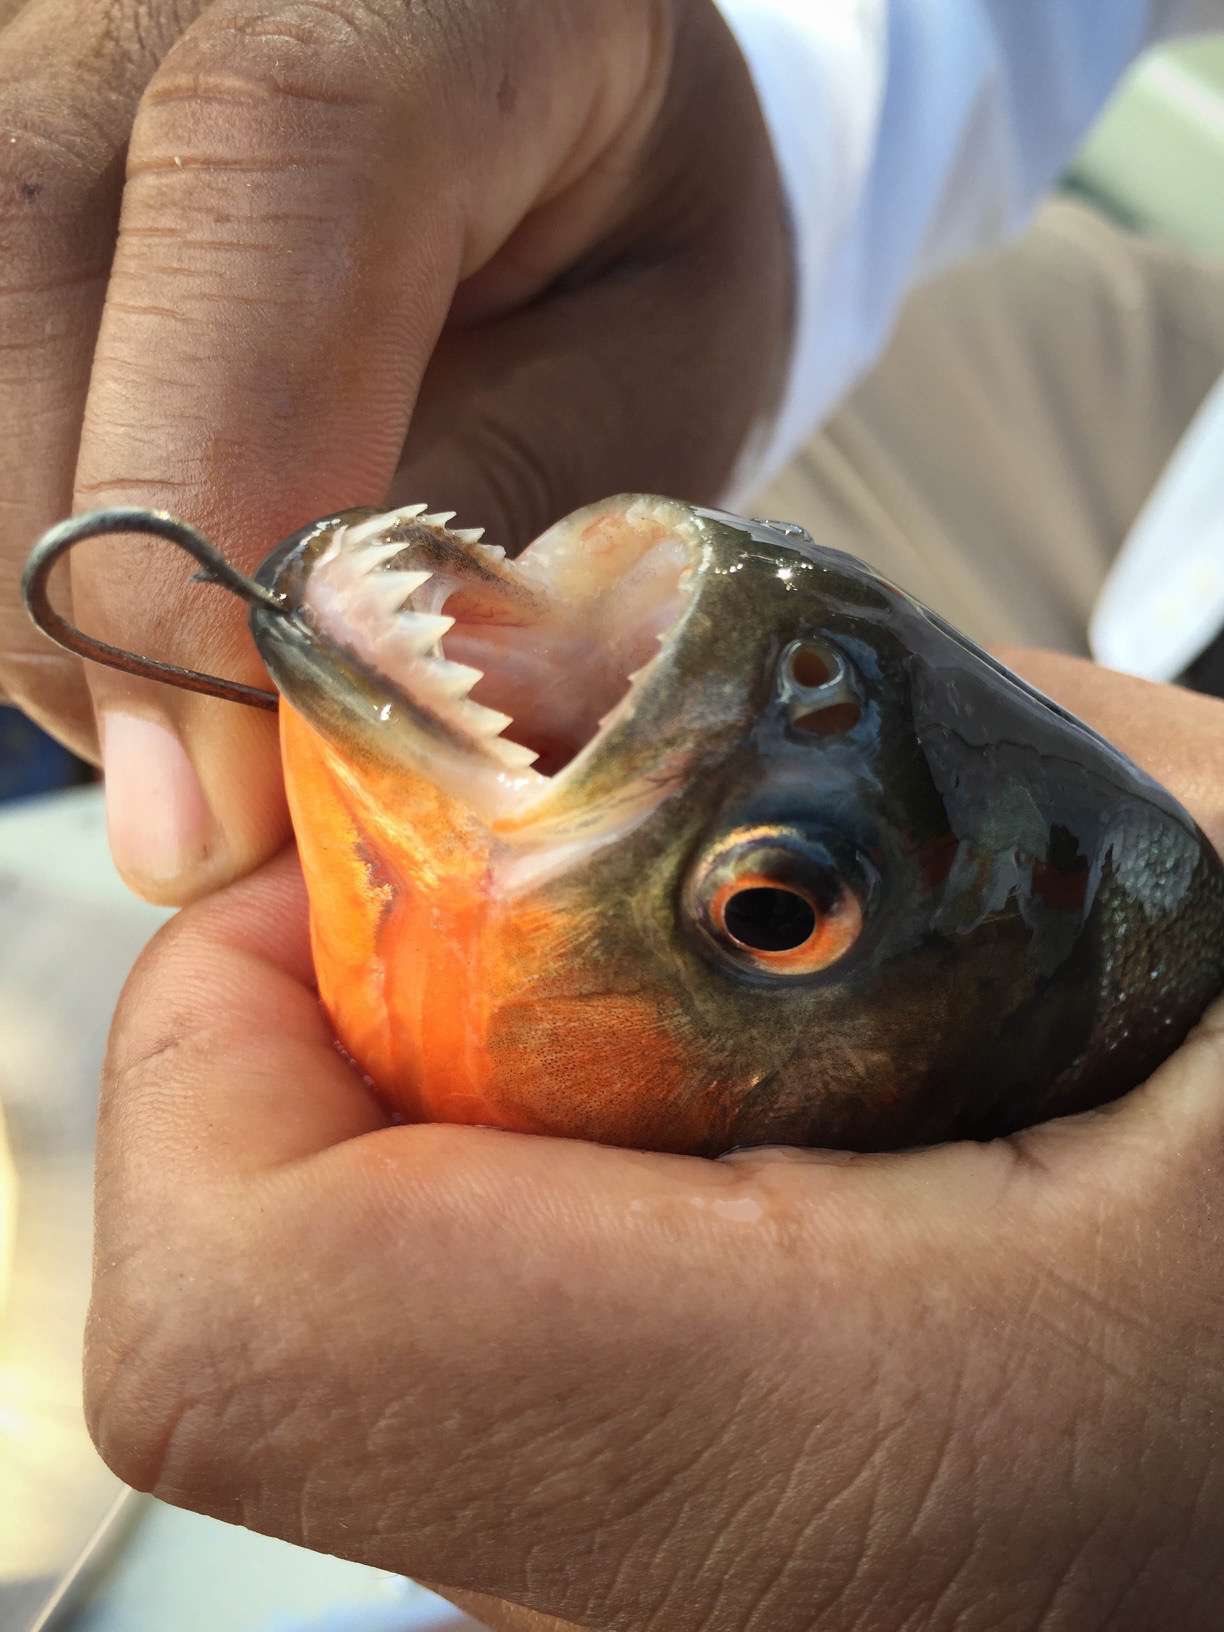 Even a small pink bellied piranha has razor sharp teeth.